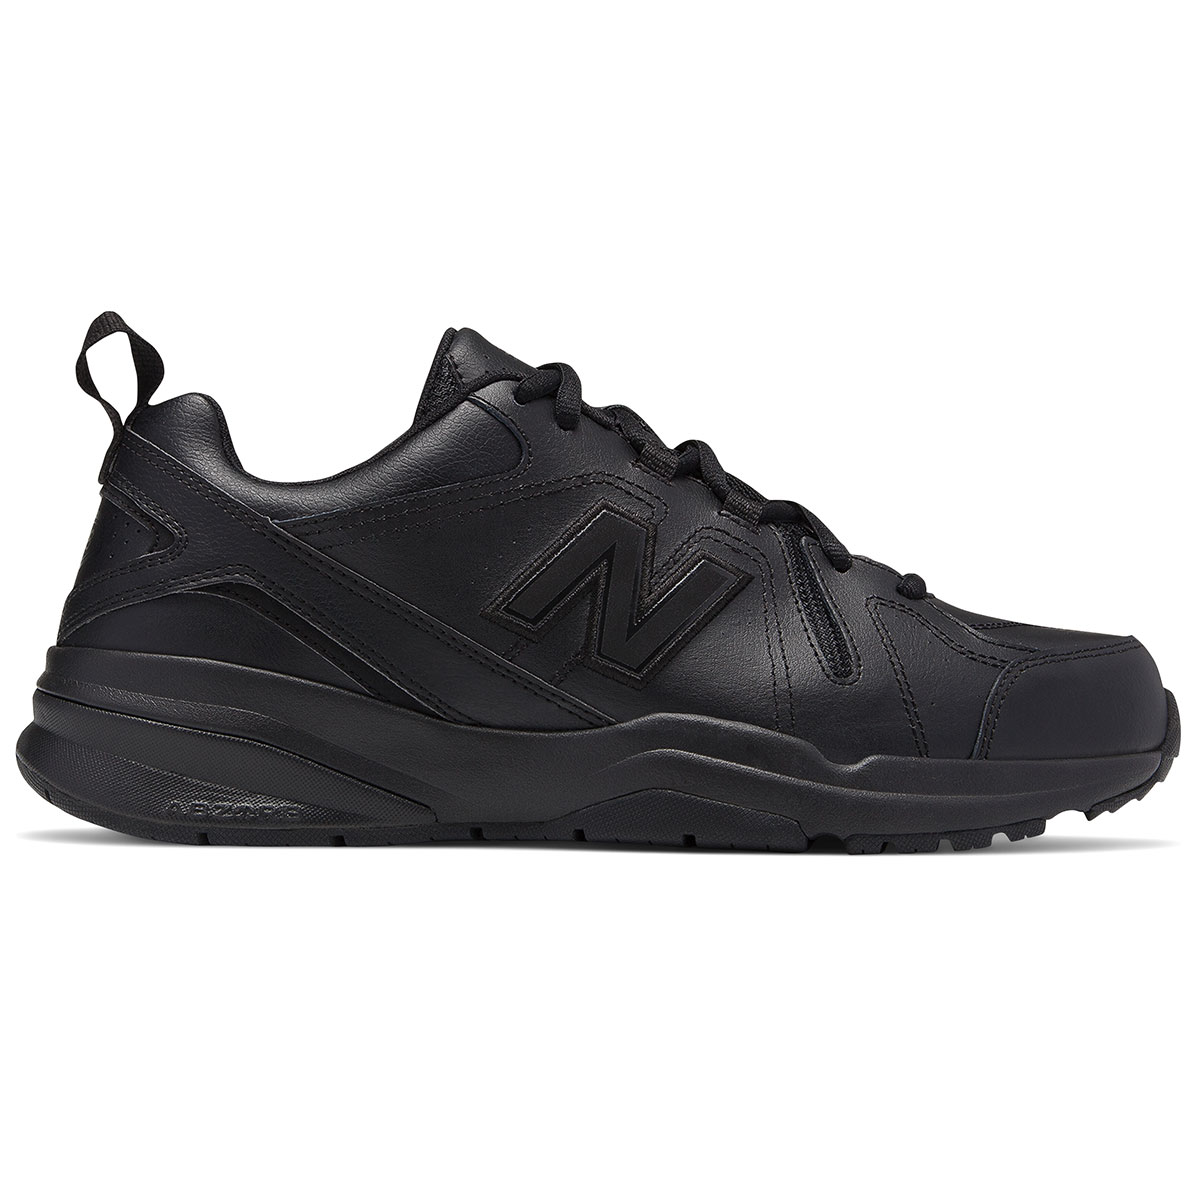 New Balance Men's 608V5 Training Shoes, Extra Wide - Black, 11.5